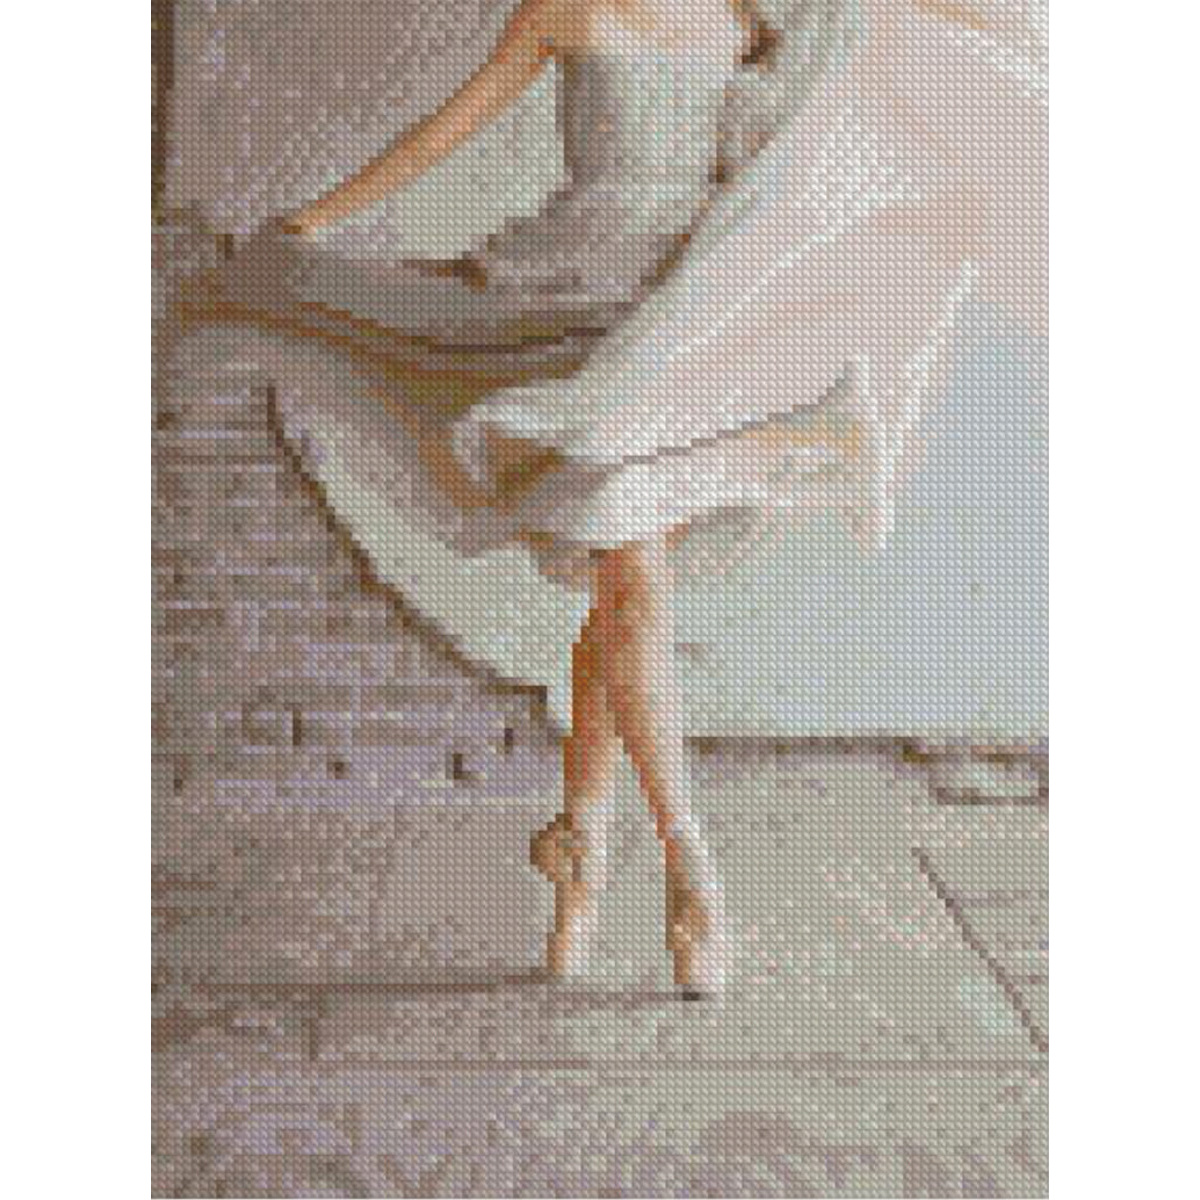 Diamond mosaic Premium HX229 "Ballet", size 30x40 cm